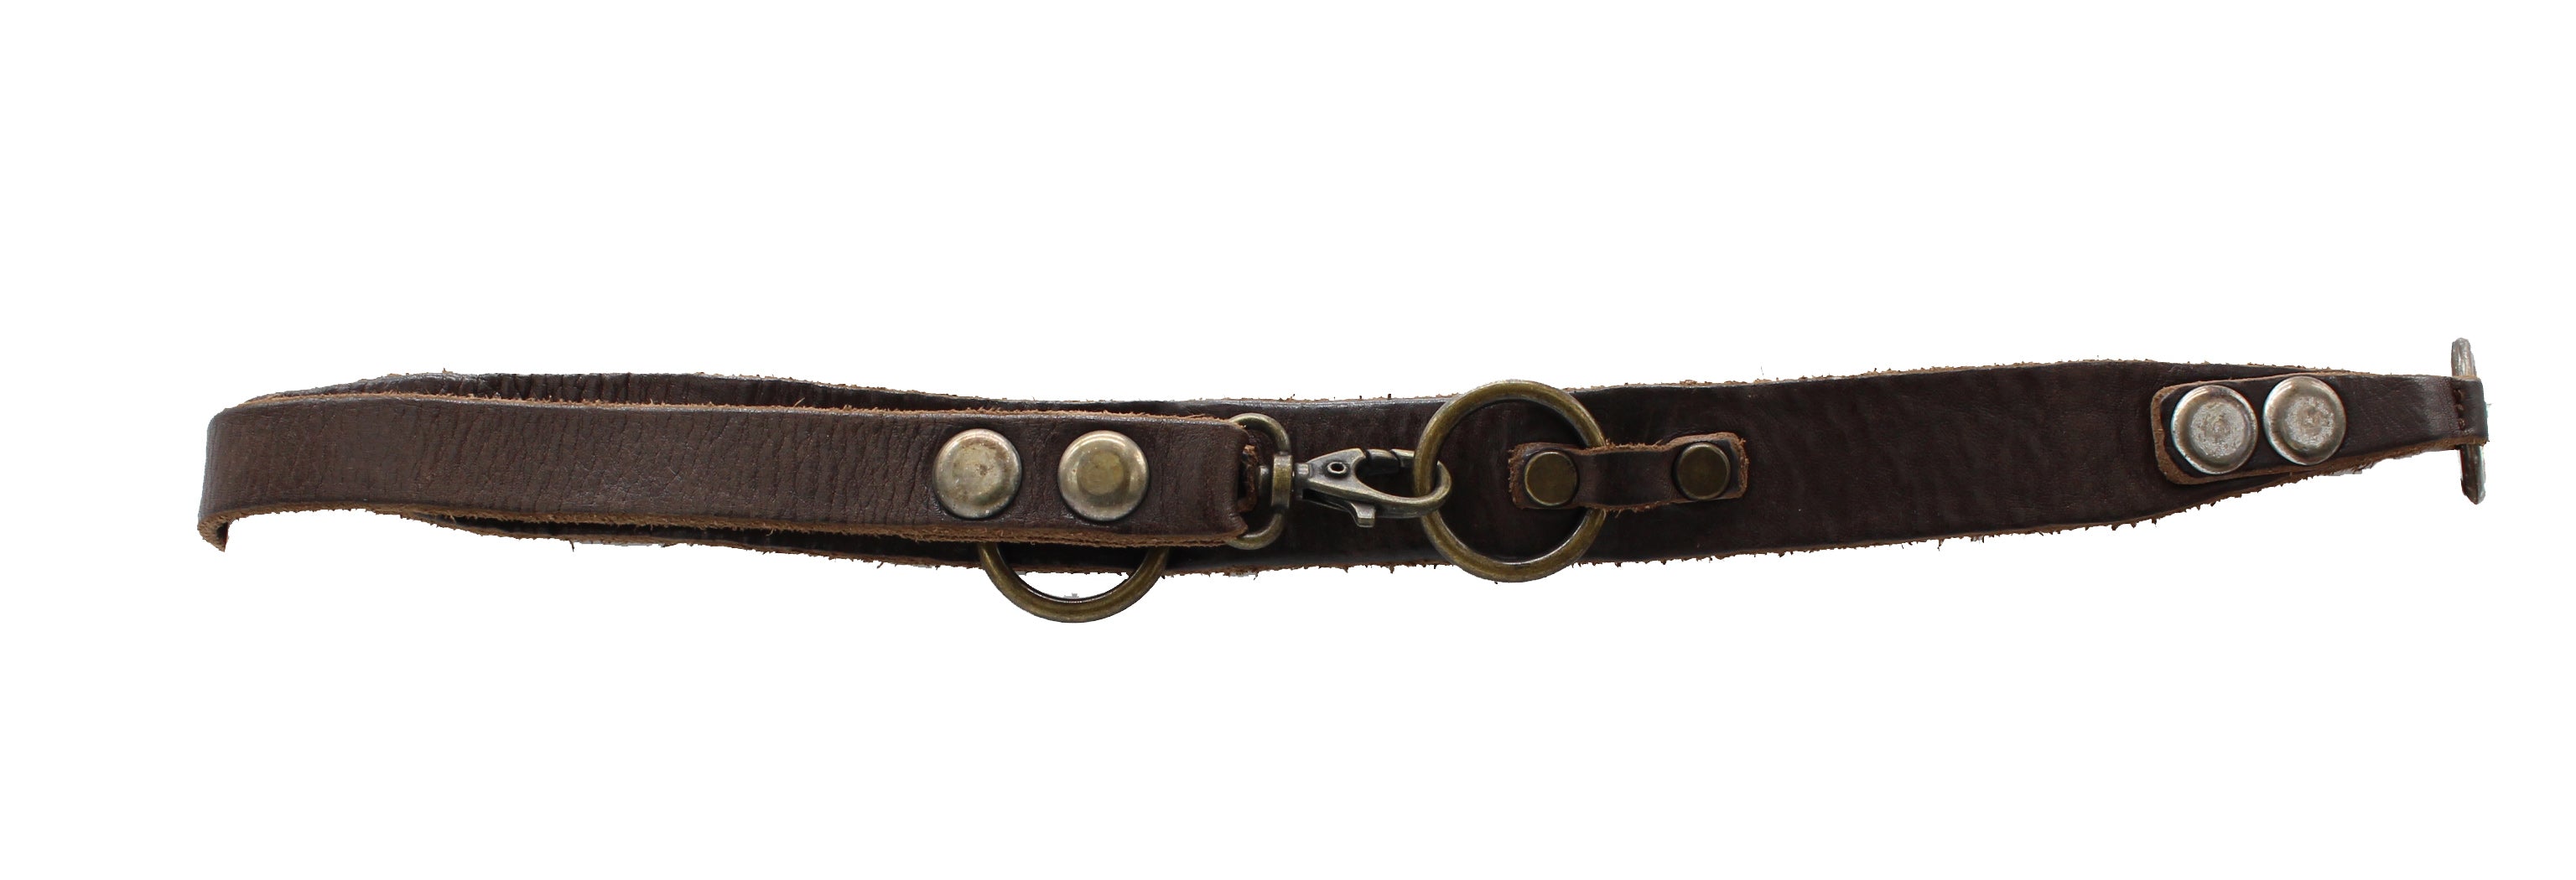 260 brown belt